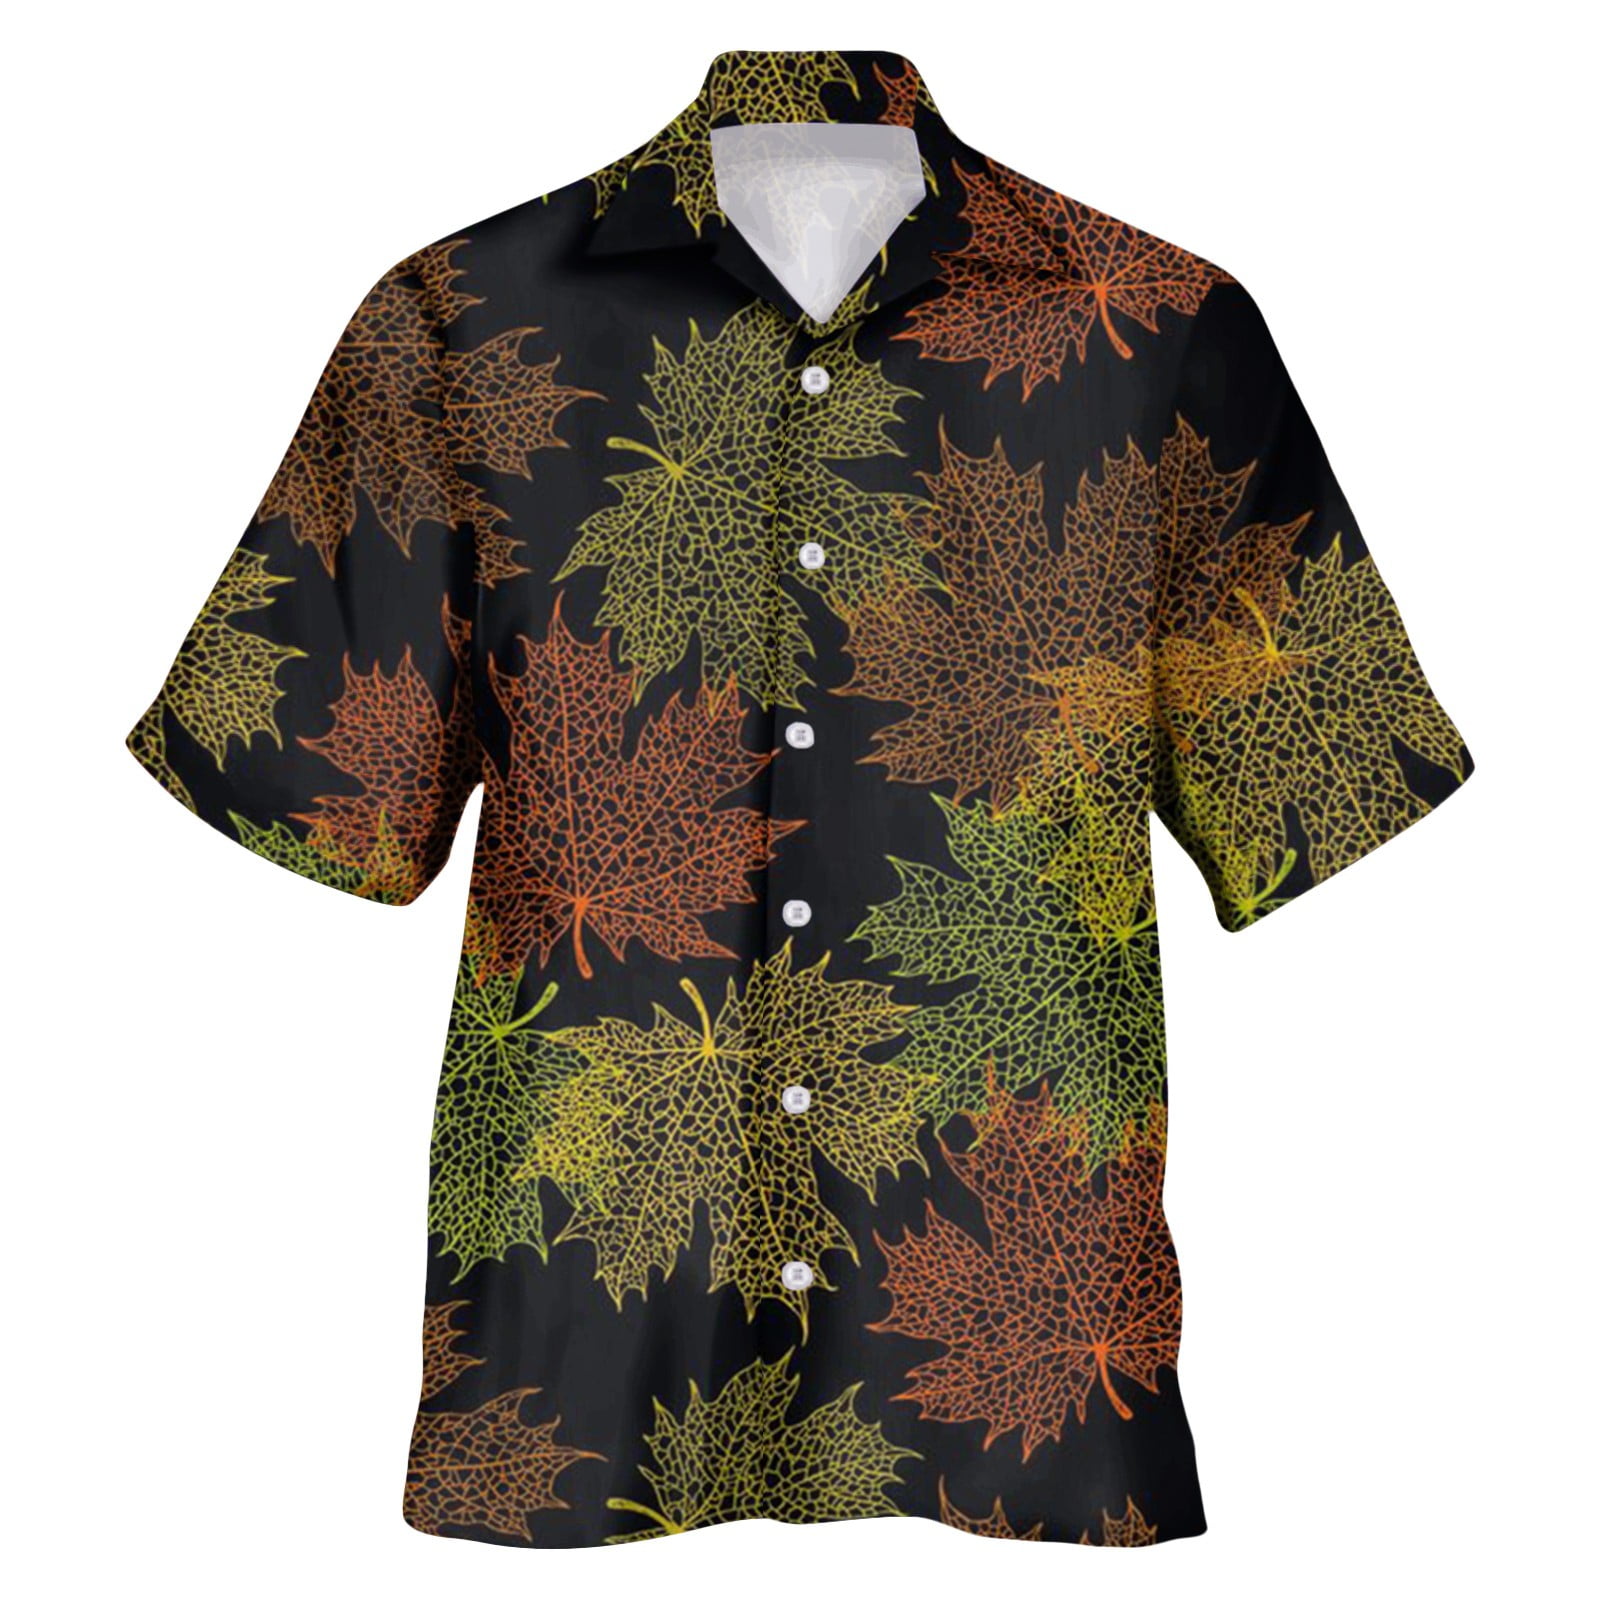 AdBFJAF Compression Shirt Men Male Summer Fashion Lapel Short Sleeve ...